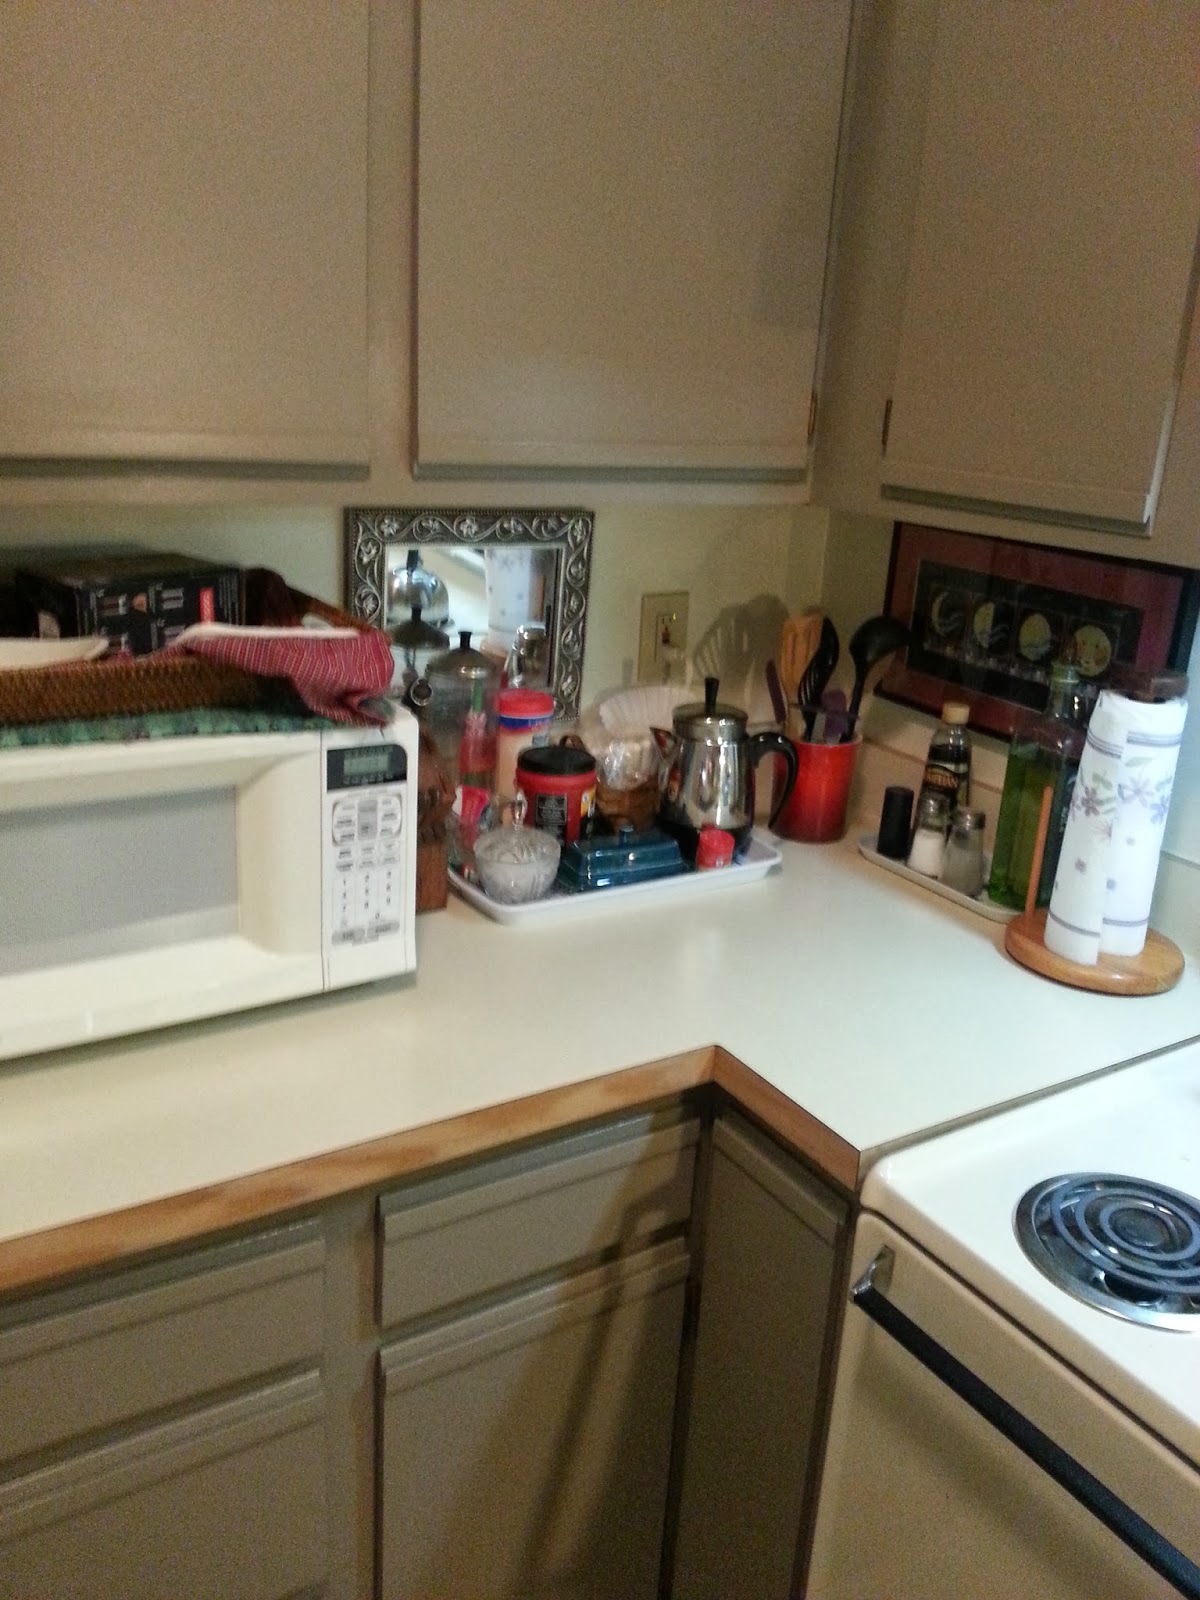 foobella design: Painting Laminate Kitchen Cabinets. Done!